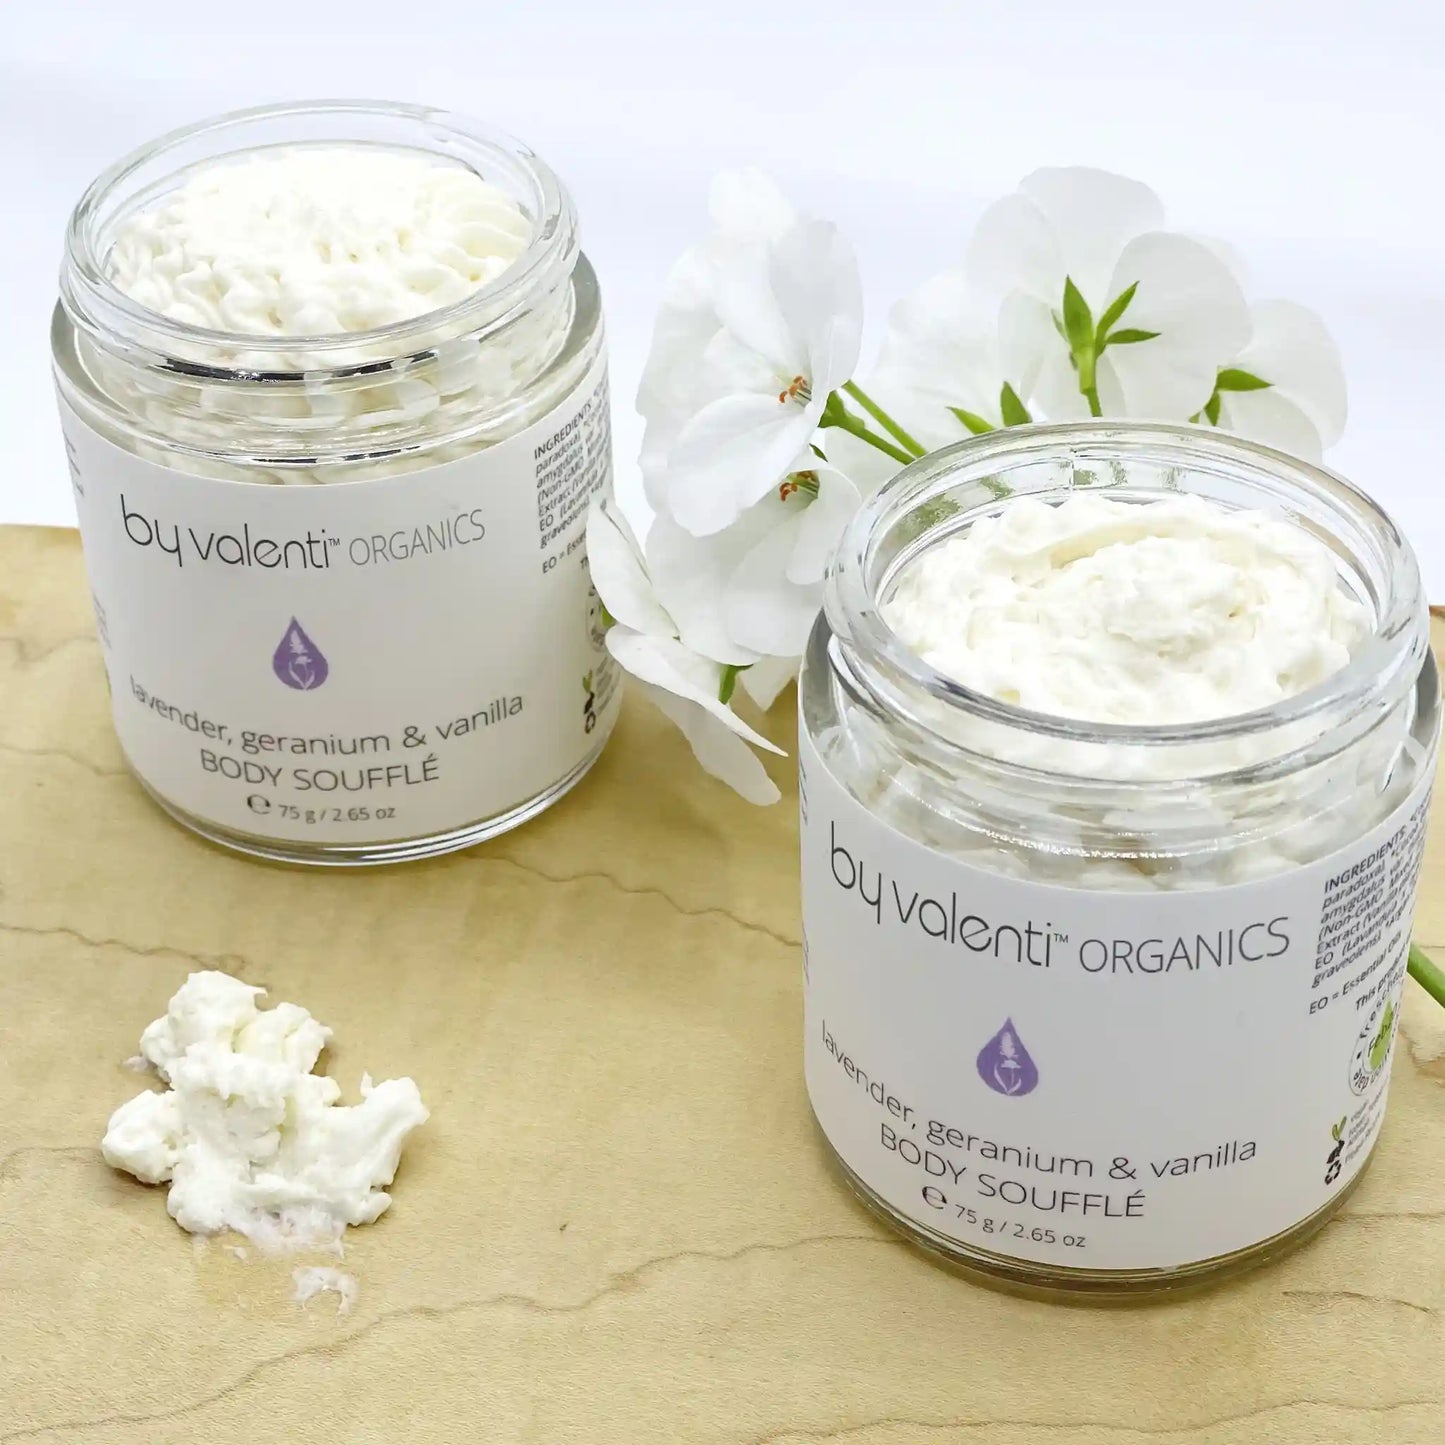 By Valenti Organics Lavender, Geranium & Vanilla Whipped Body Balm for Dry Skin